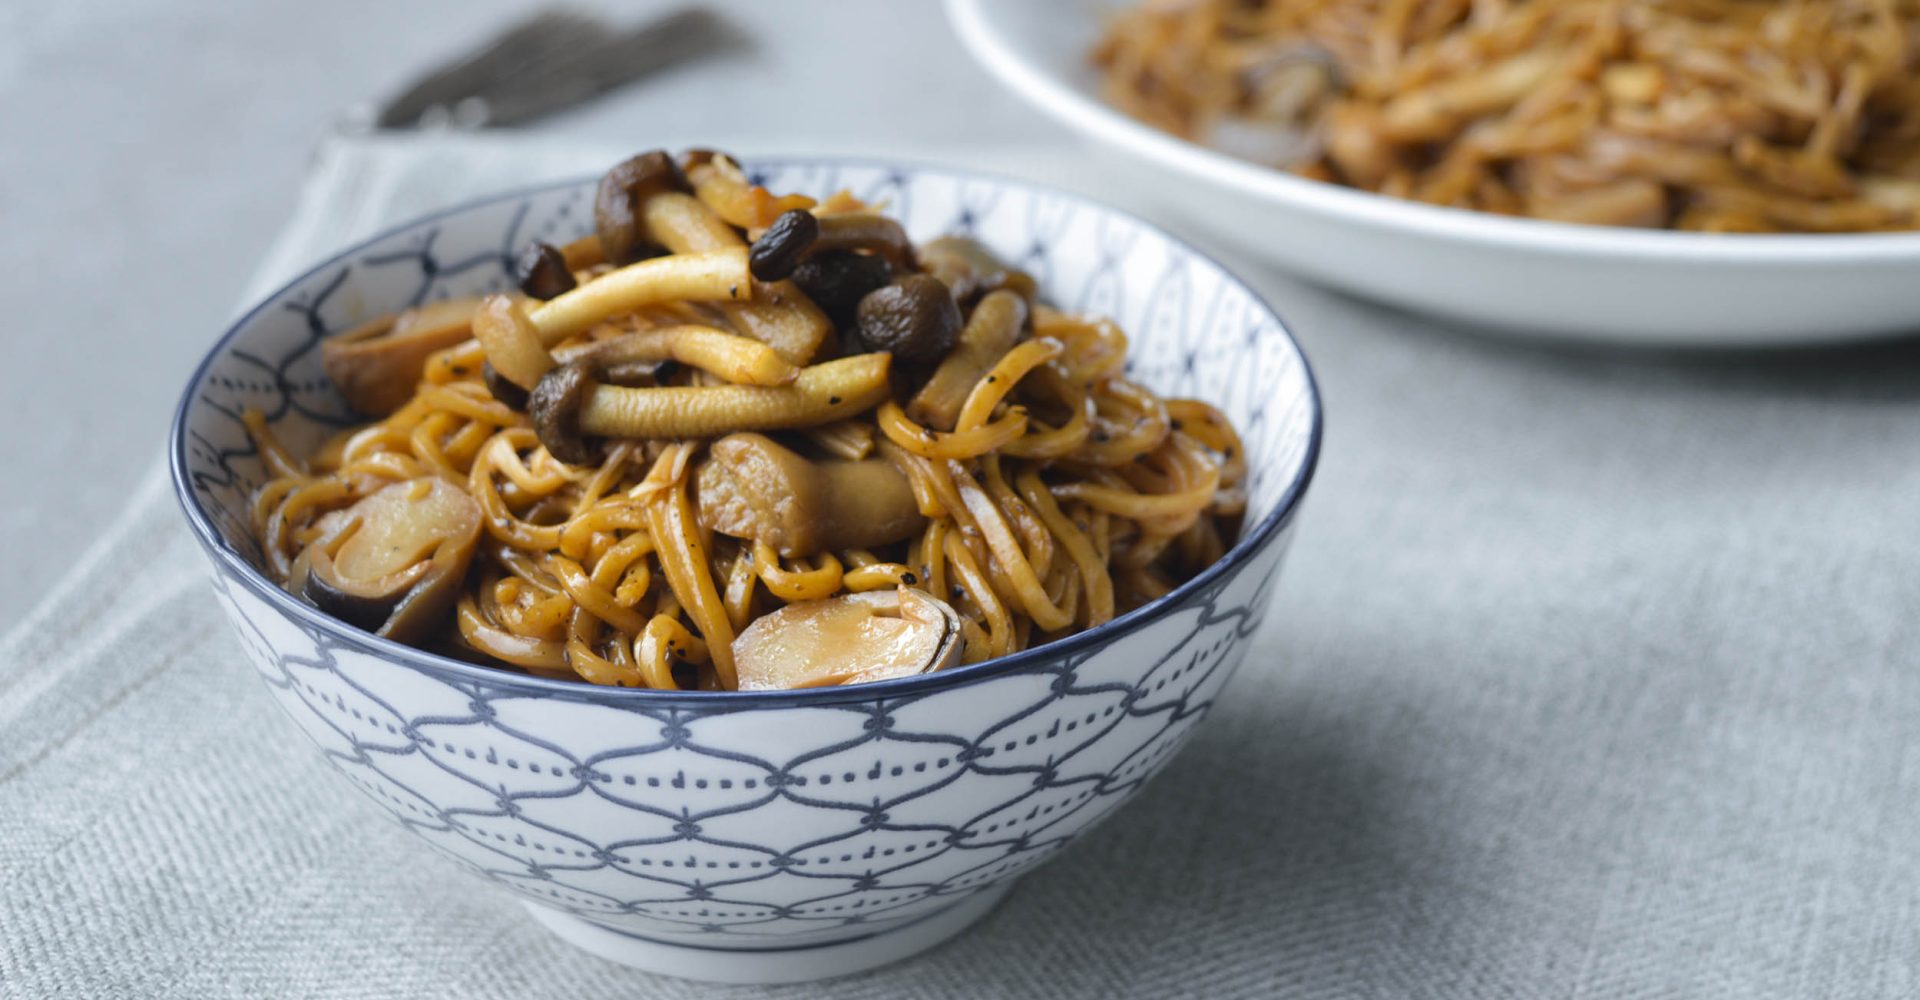 E-fu noodles with mushroom and truffle